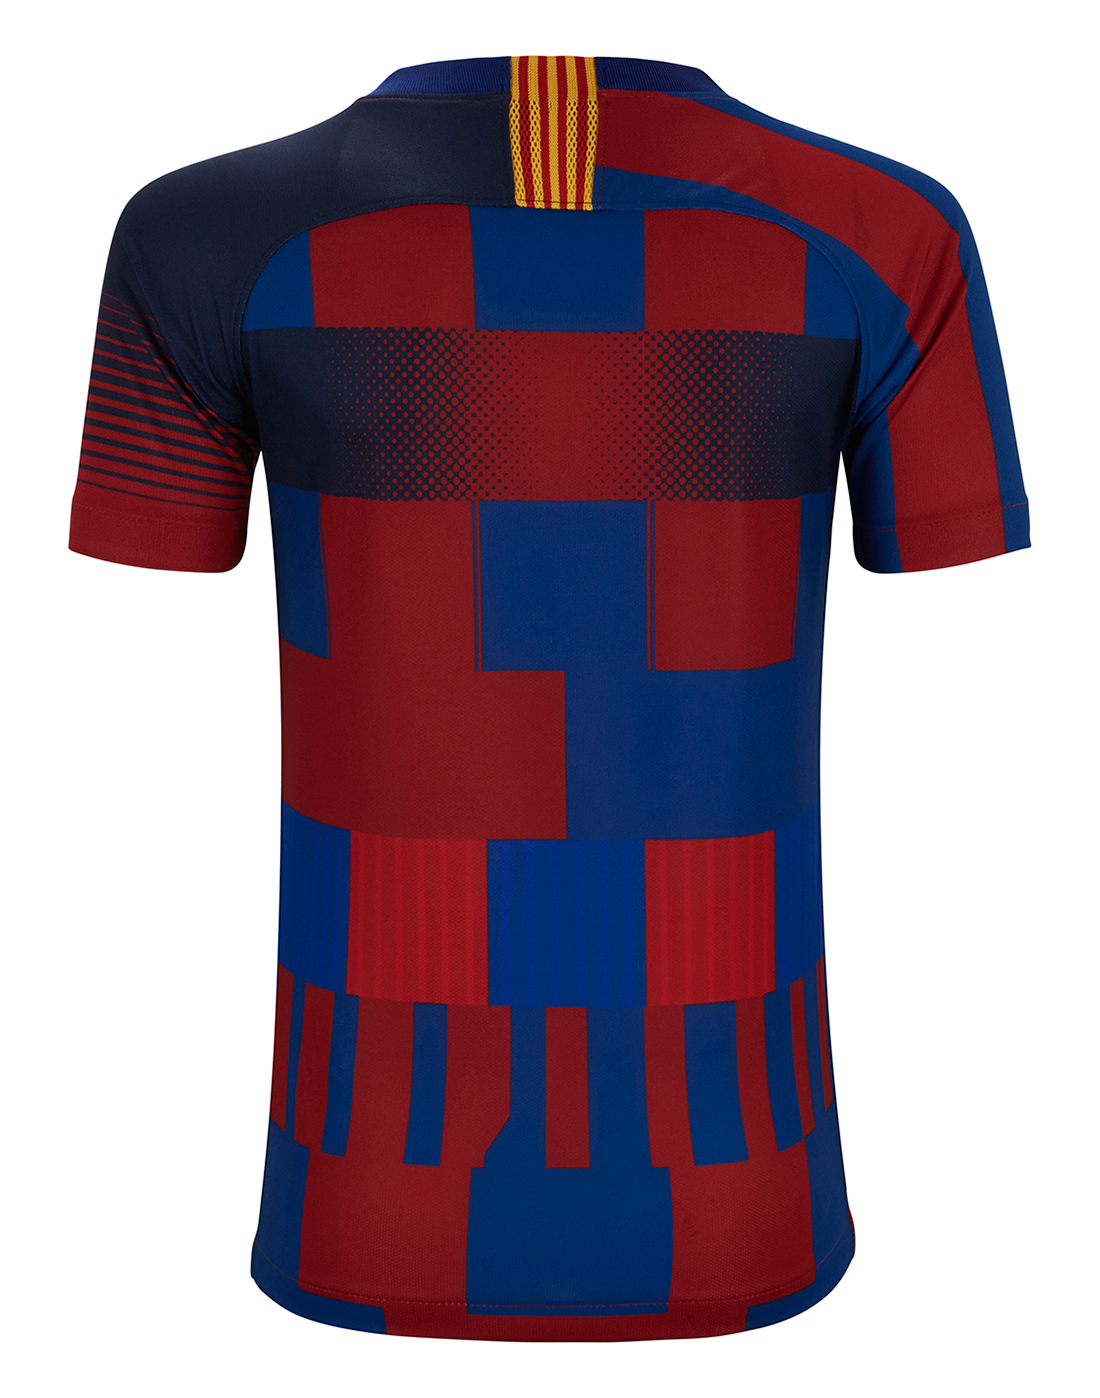 Barcelona Uniform / Nike FC Barcelona What The 20th Anniversary Jersey ...